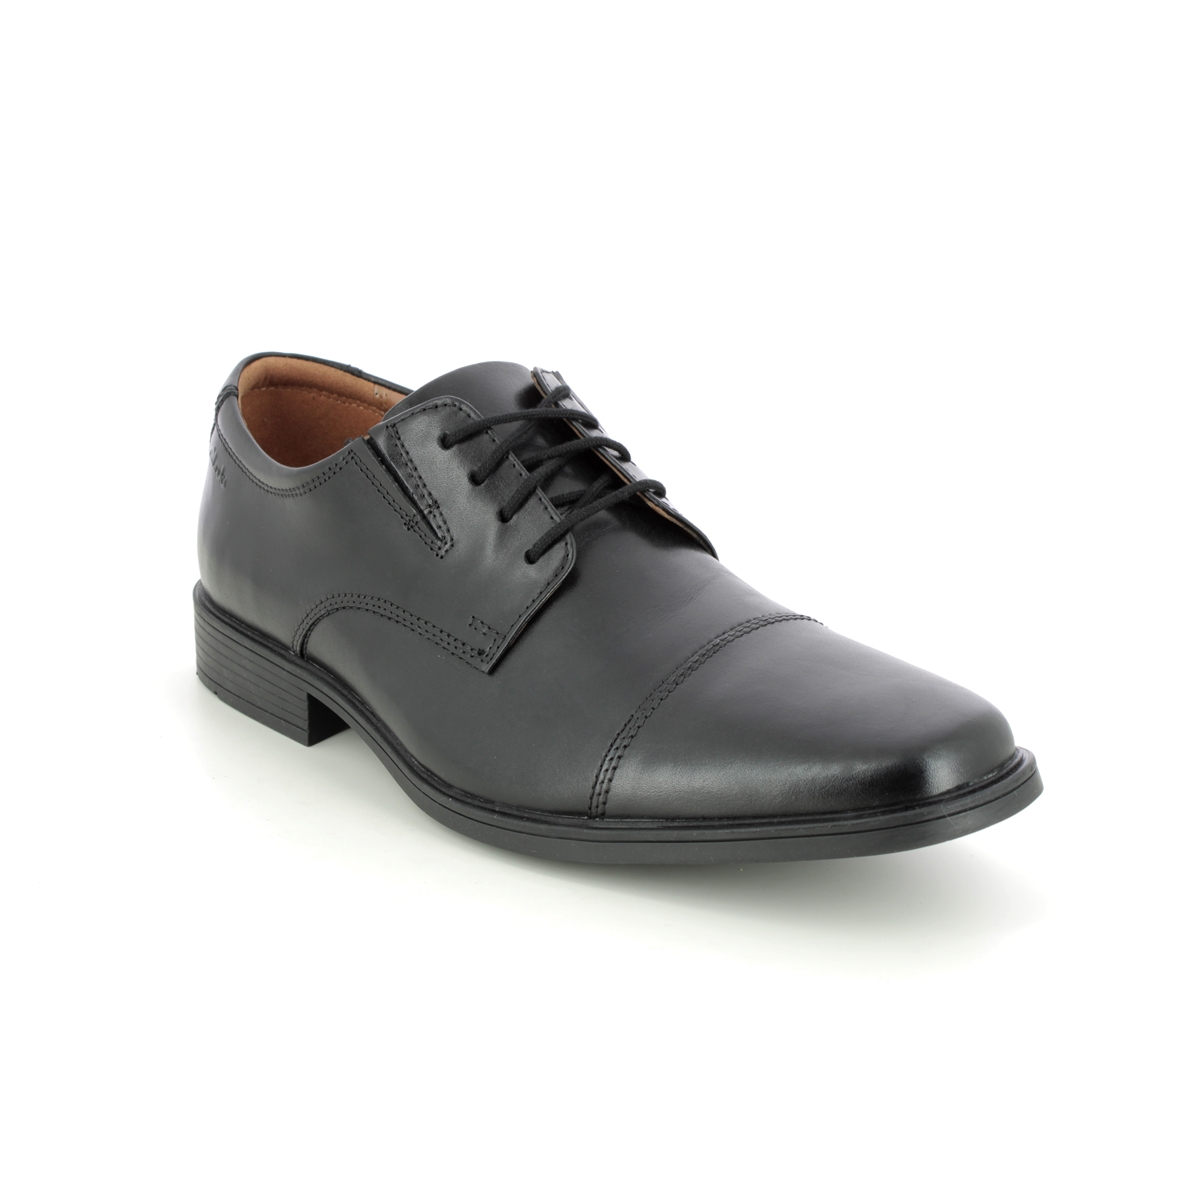 Clarks Tilden Cap Black Leather Mens Formal Shoes 103097G In Size 11 In Plain Black Leather G Width Fitting